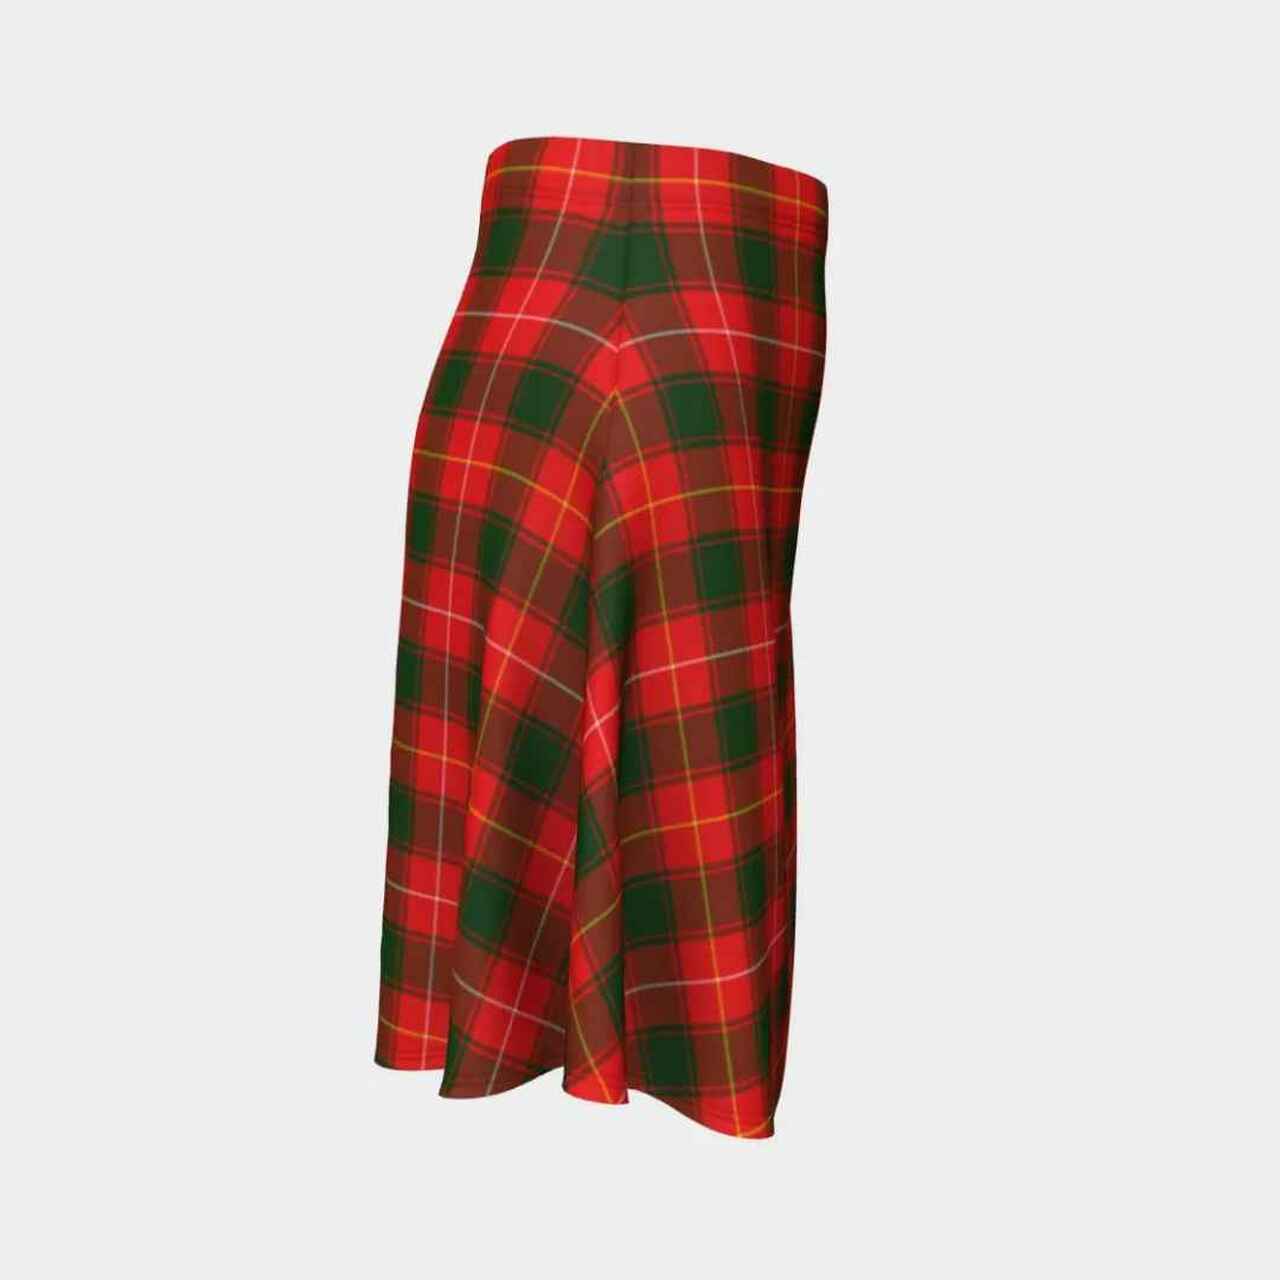 MacPhee Modern Tartan Flared Skirt